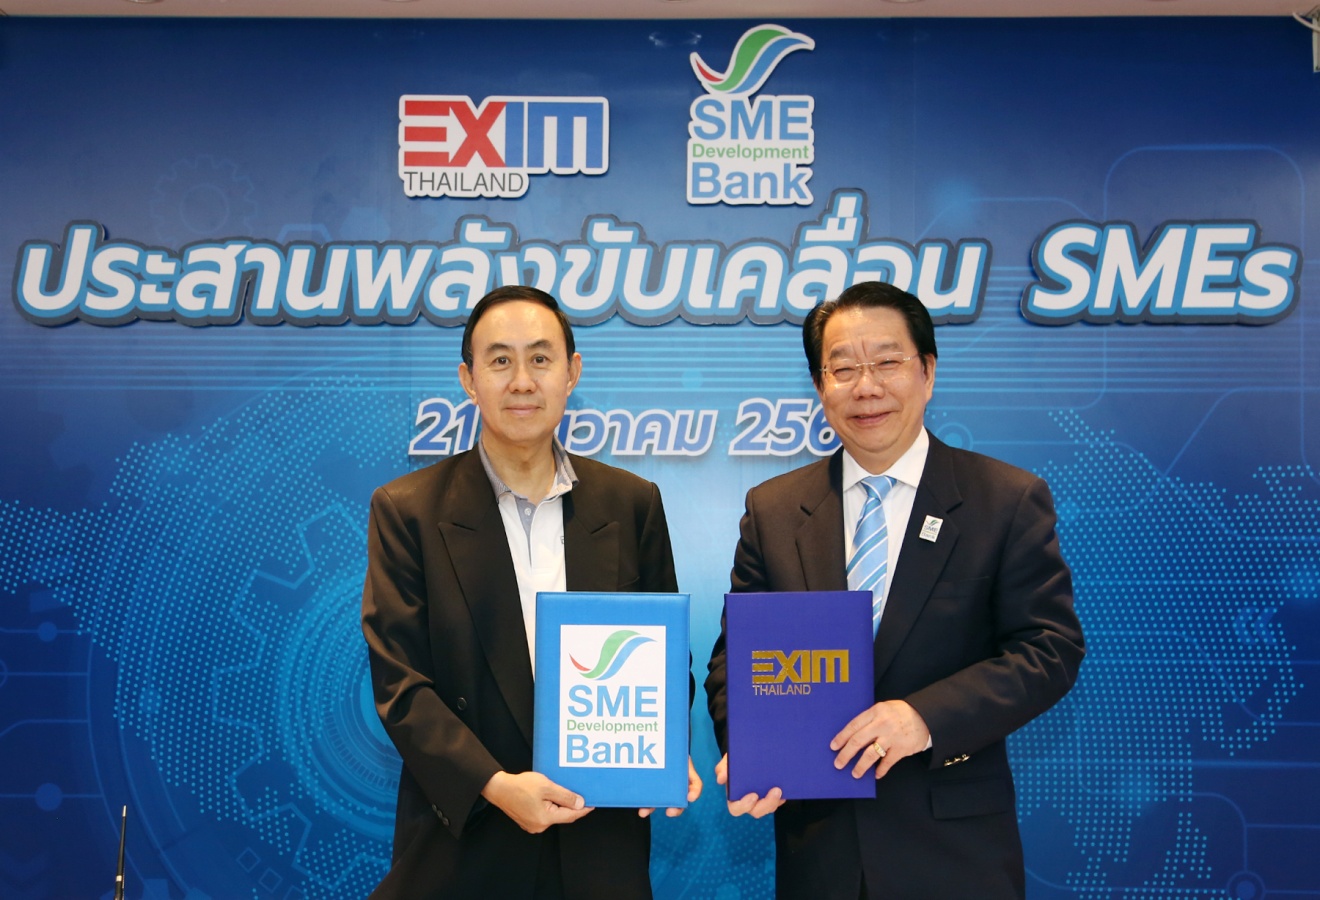 EXIM BANK และ SME Development Bank ประสานพลังขับเคลื่อนธุรกิจระหว่างประเทศของ SMEs ไทย